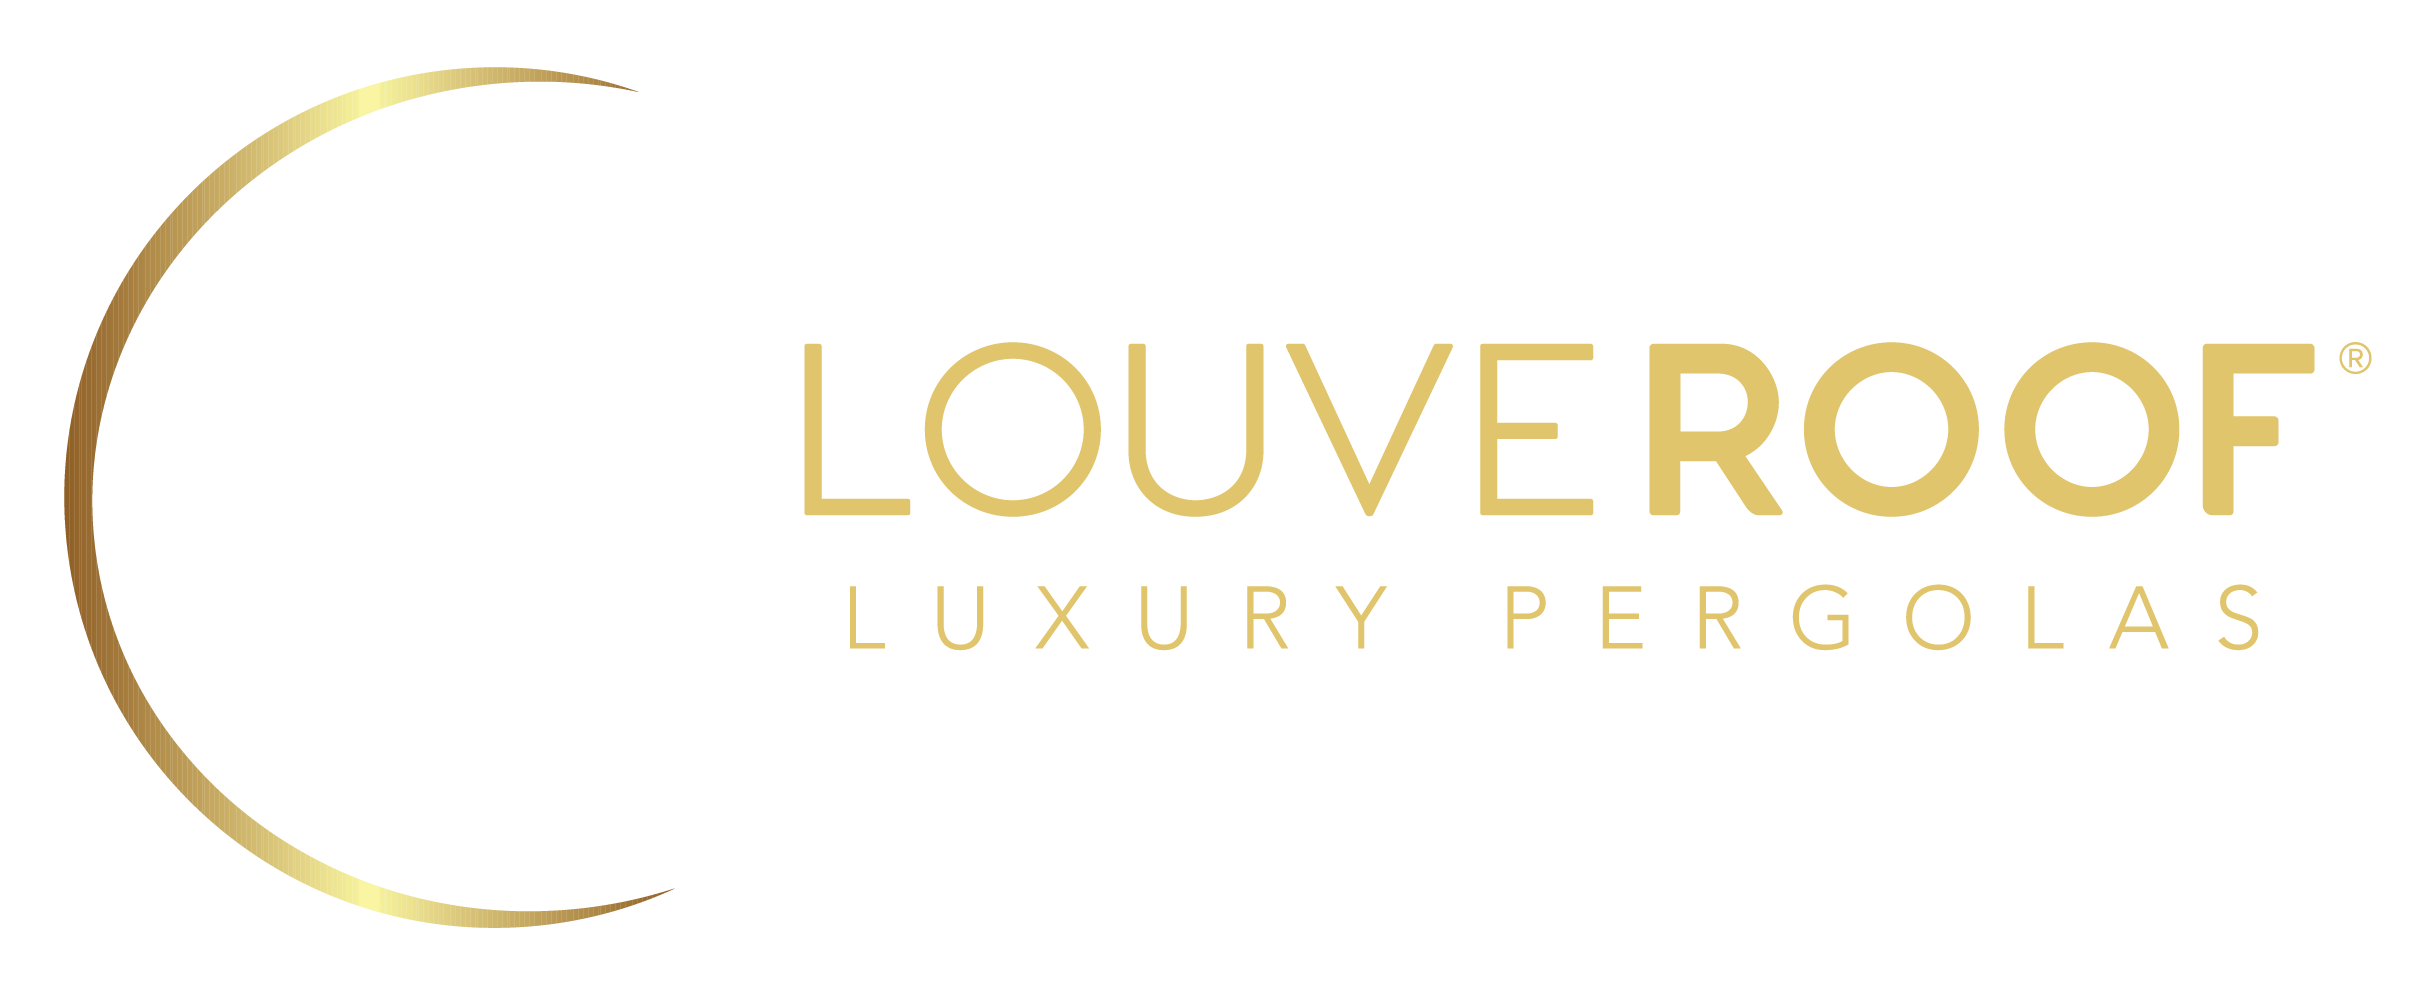 louverroof logo